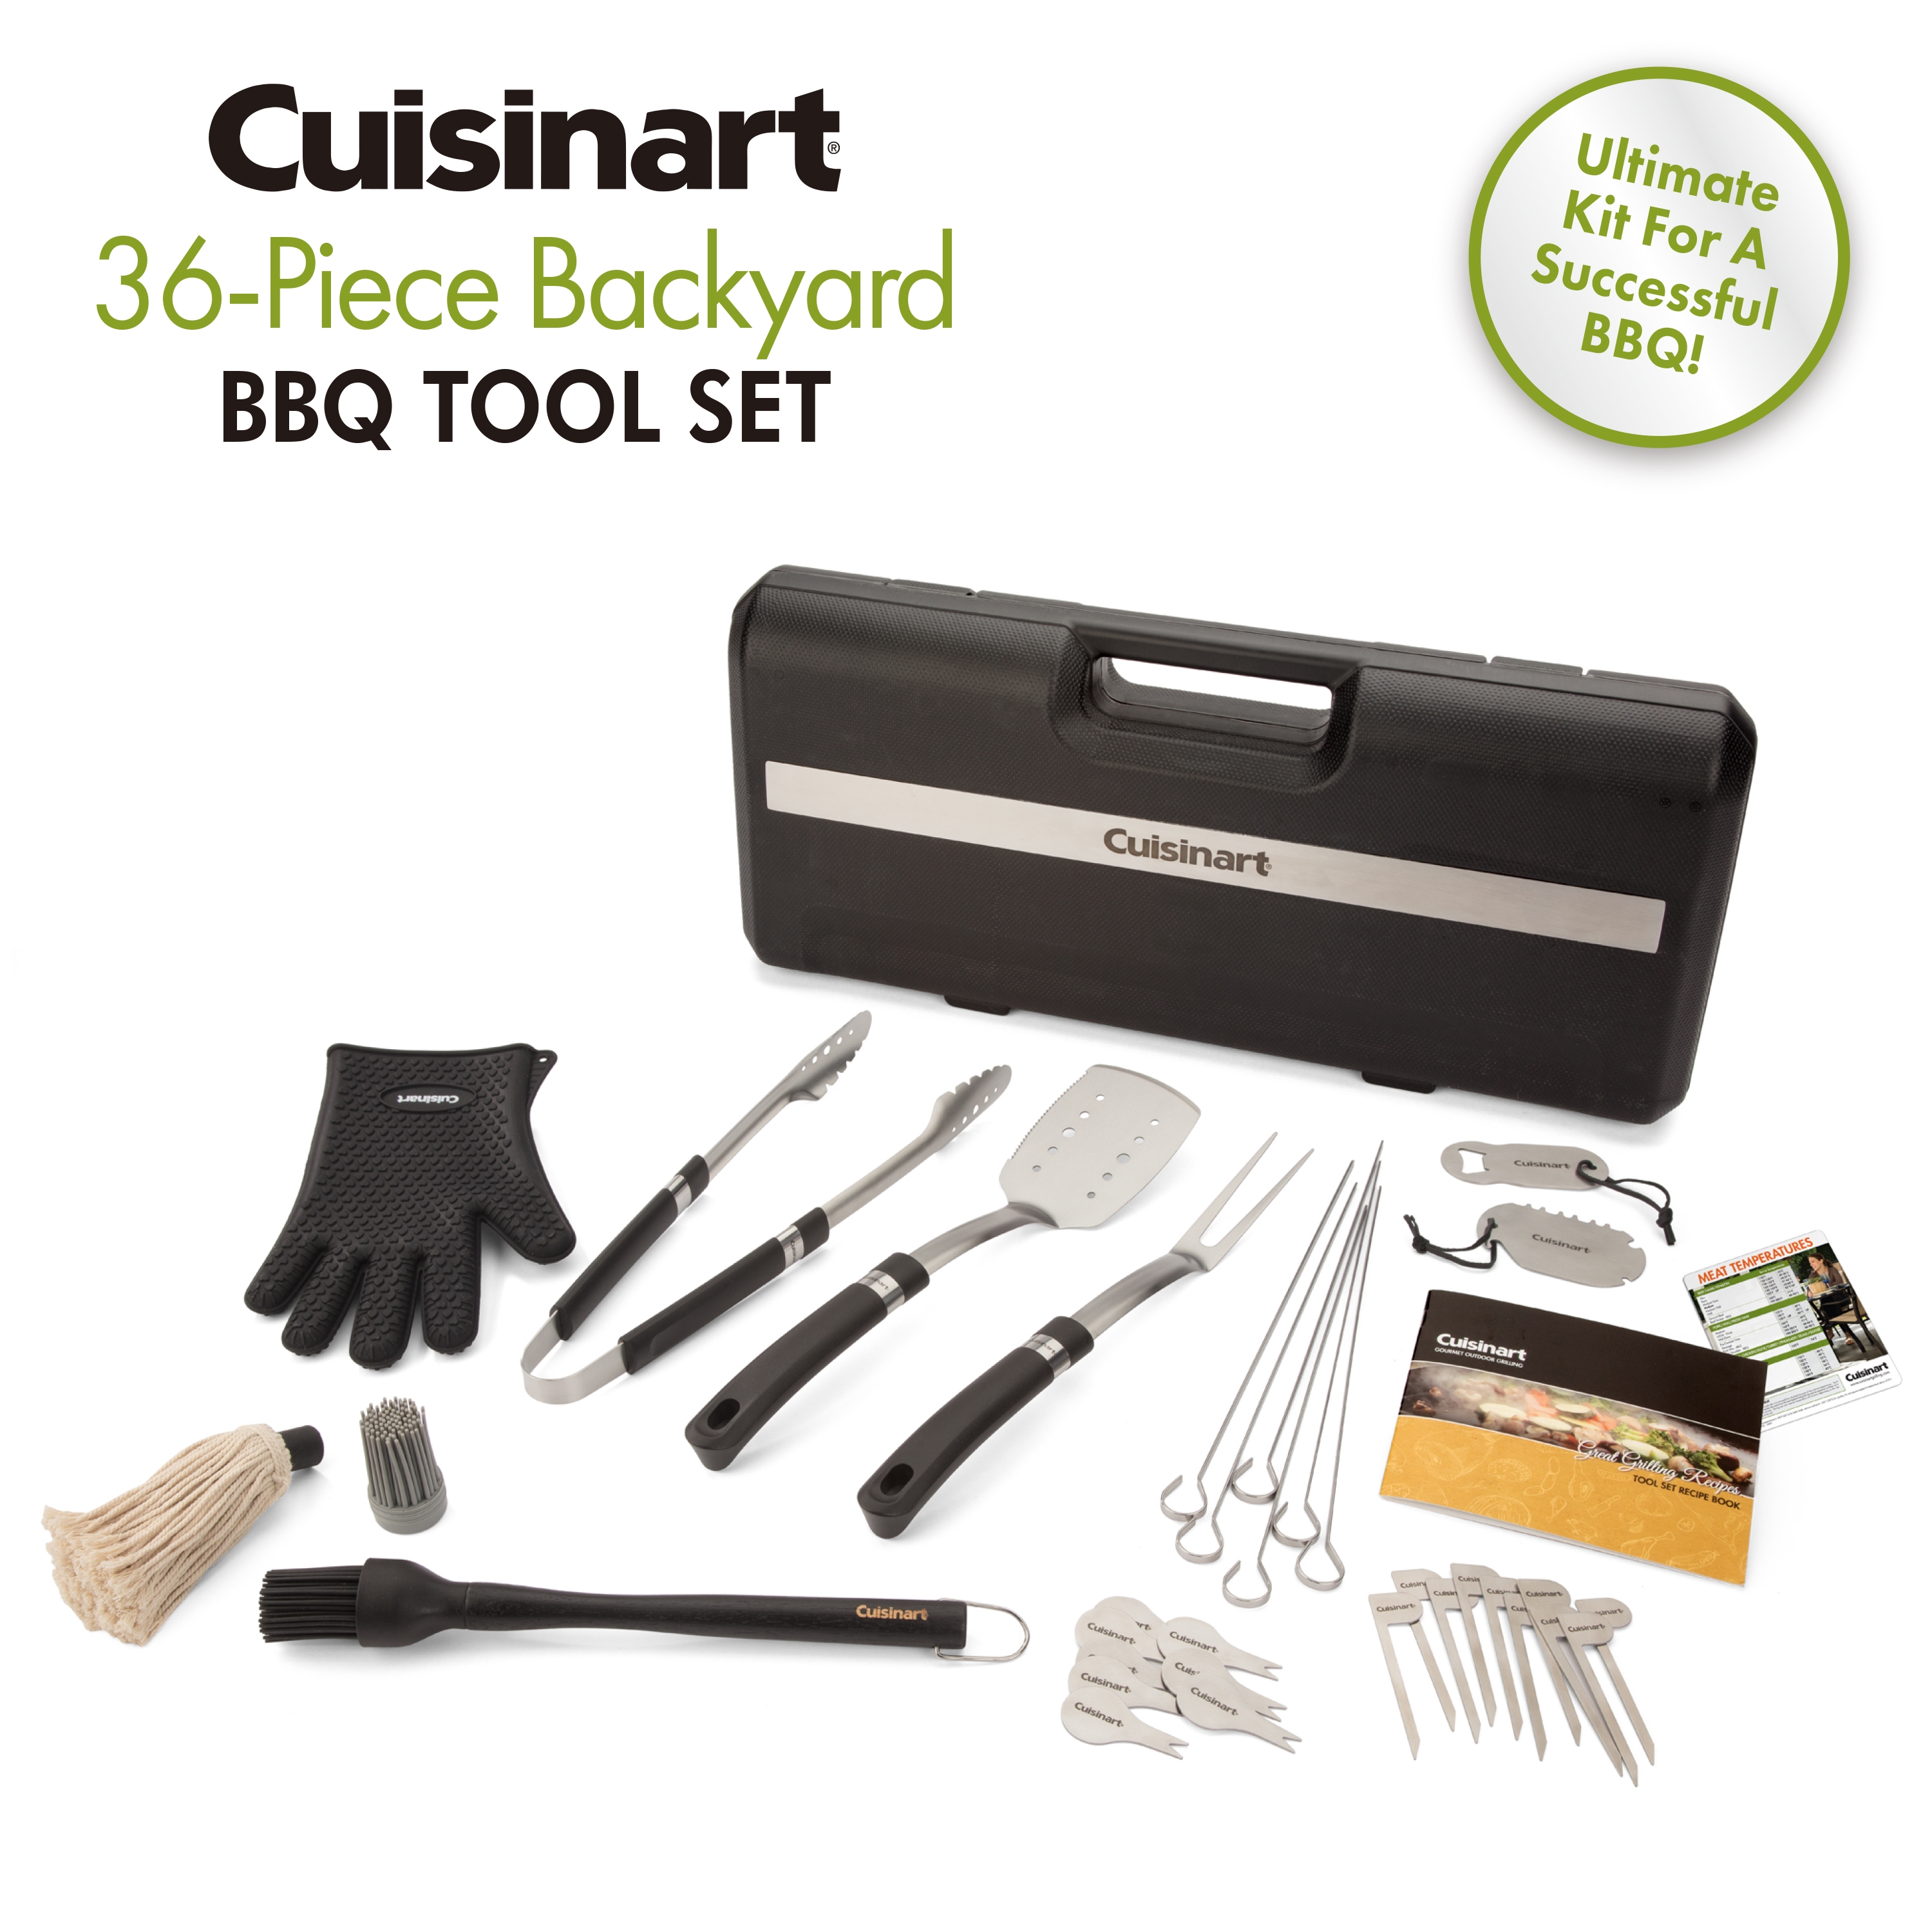 Cuisinart 5-piece Stainless Steel BBQ Tool Set